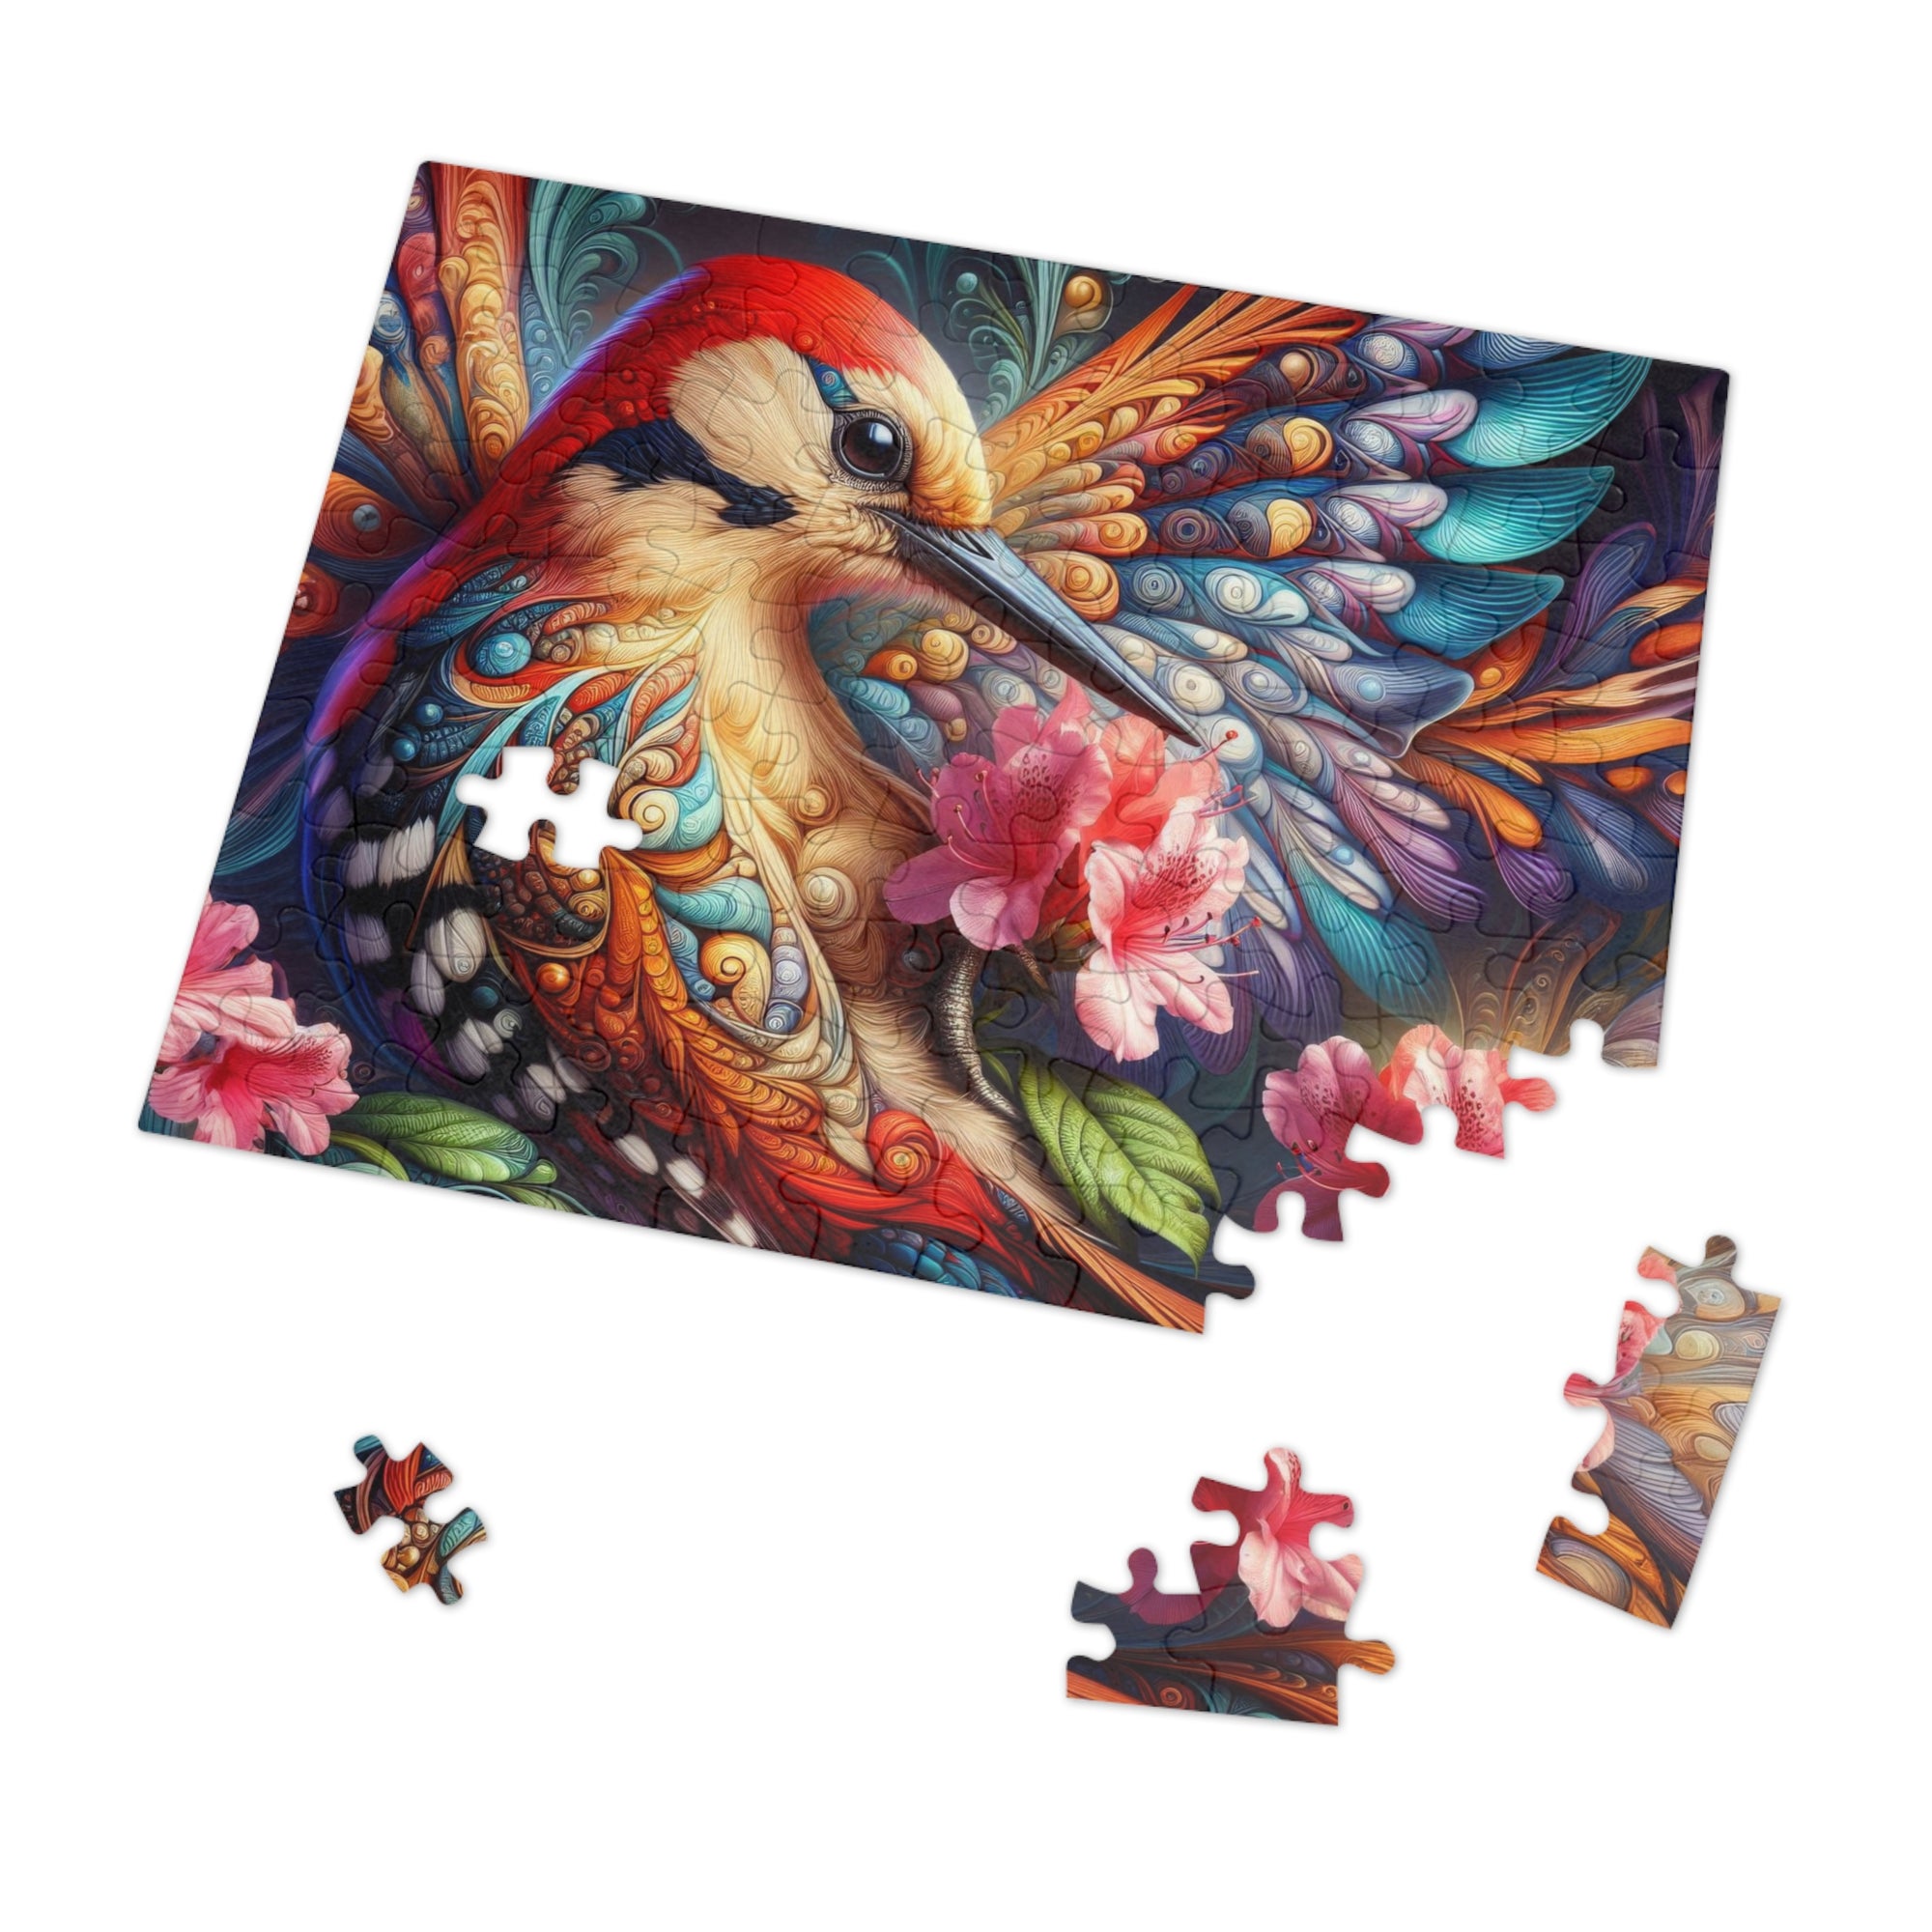 Azalea’s Guardian in Fractal Splendor Jigsaw Puzzle